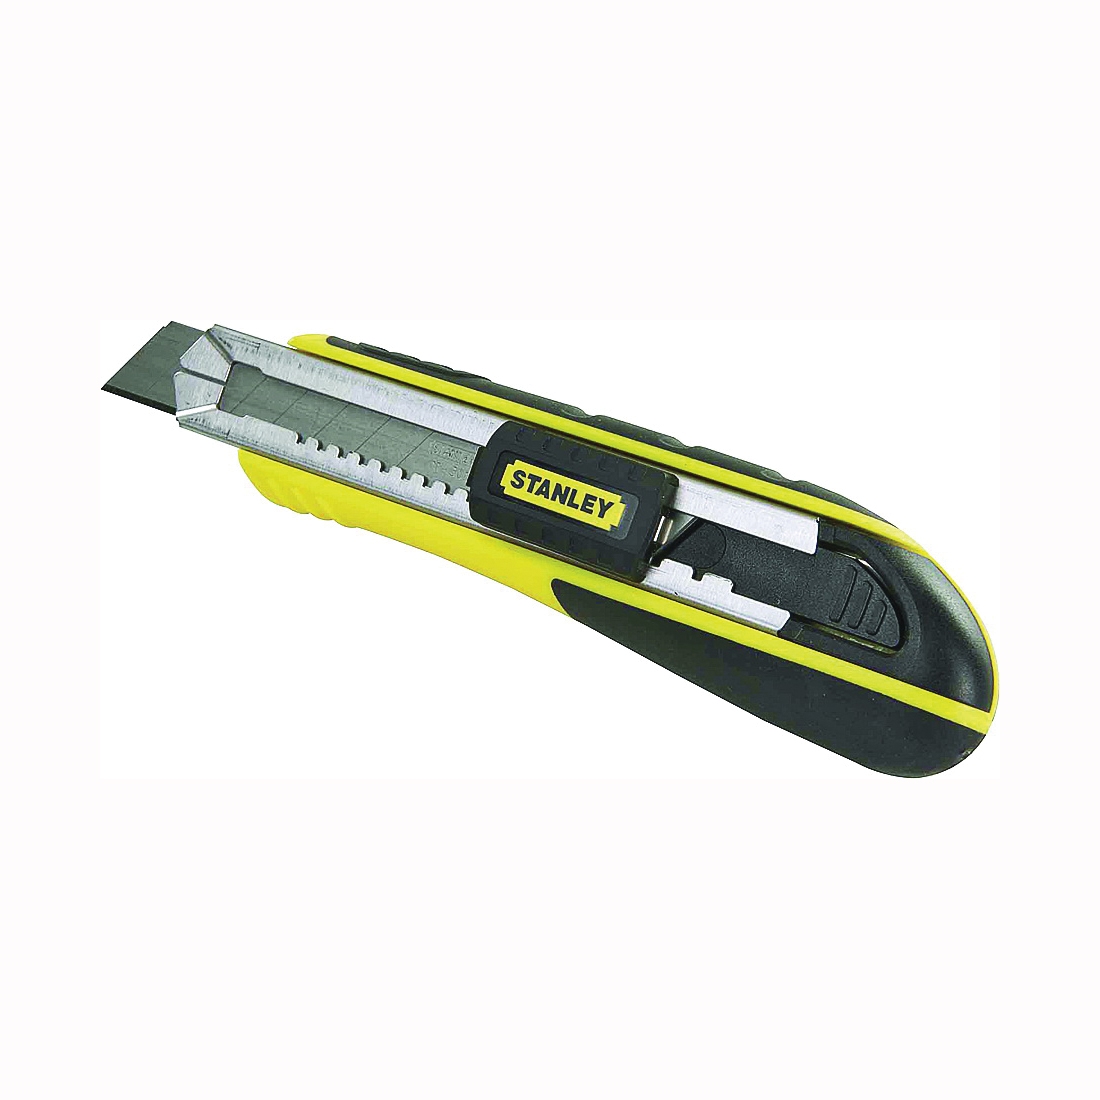 10-481 Utility Knife, 18 mm W Blade, Steel Blade, Black/Yellow Handle